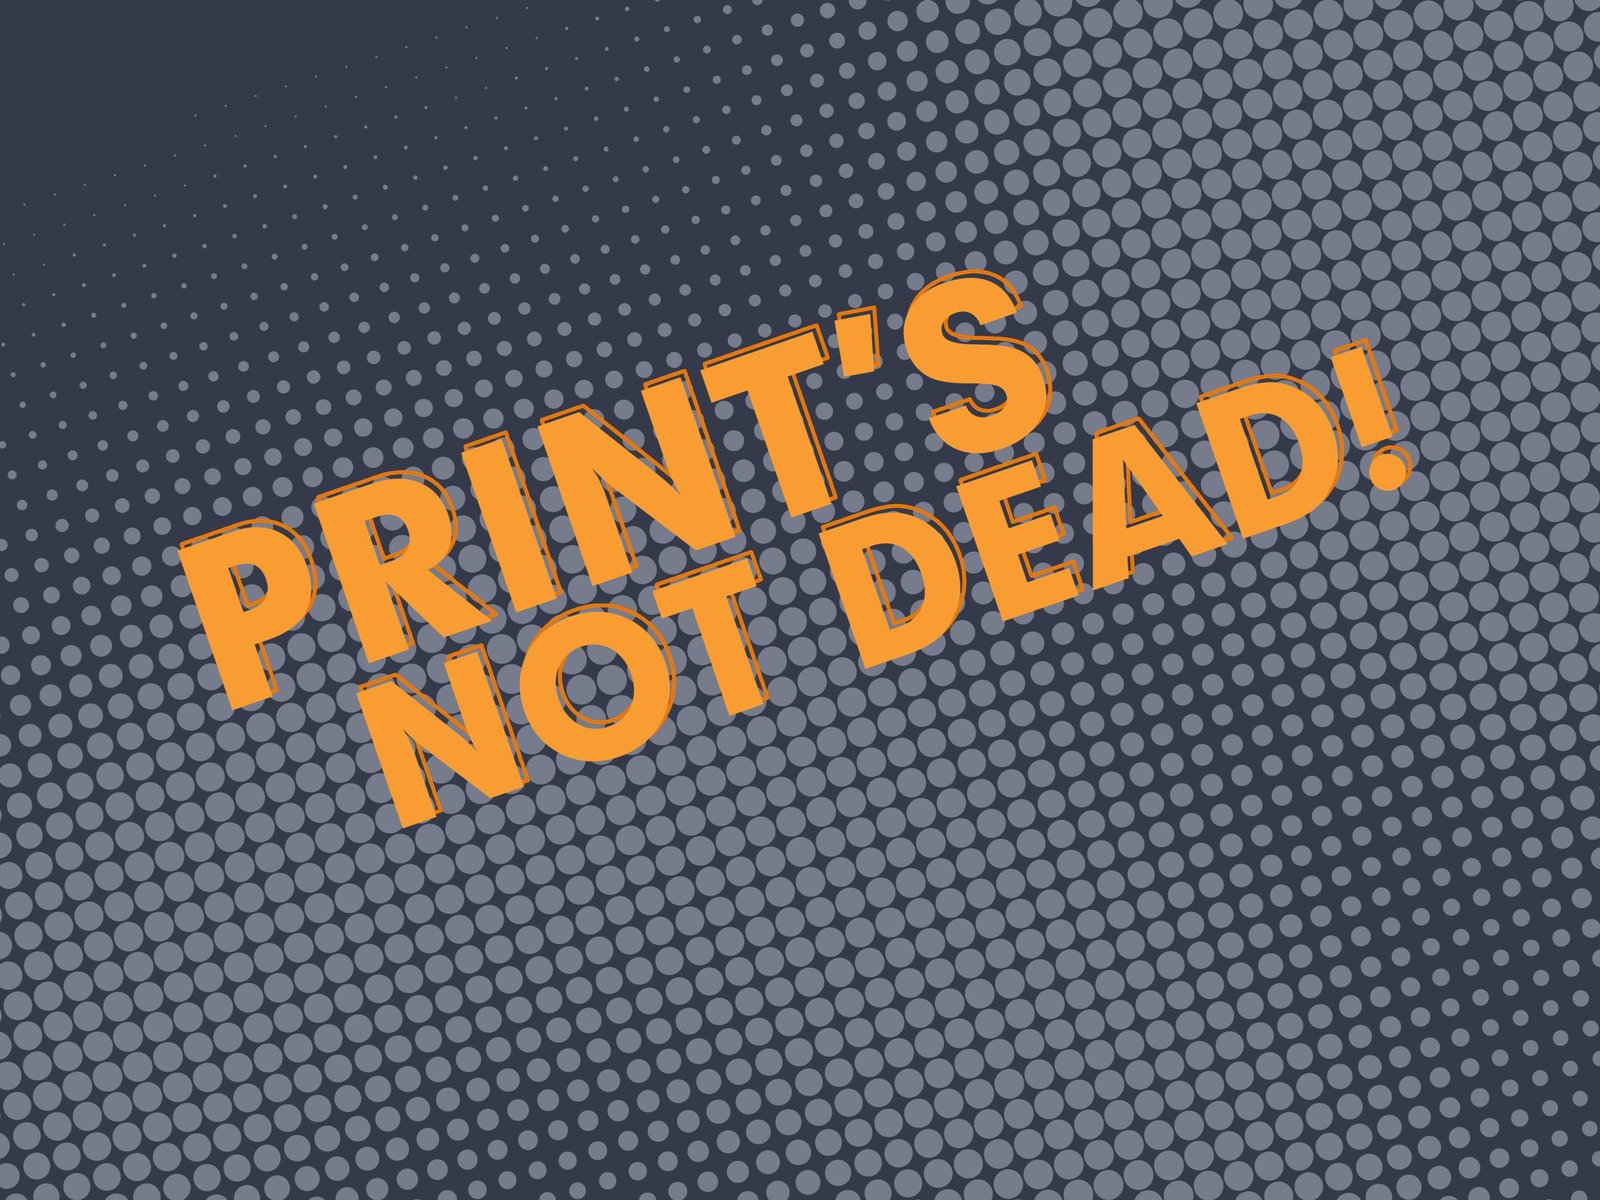 Print’s Not Dead